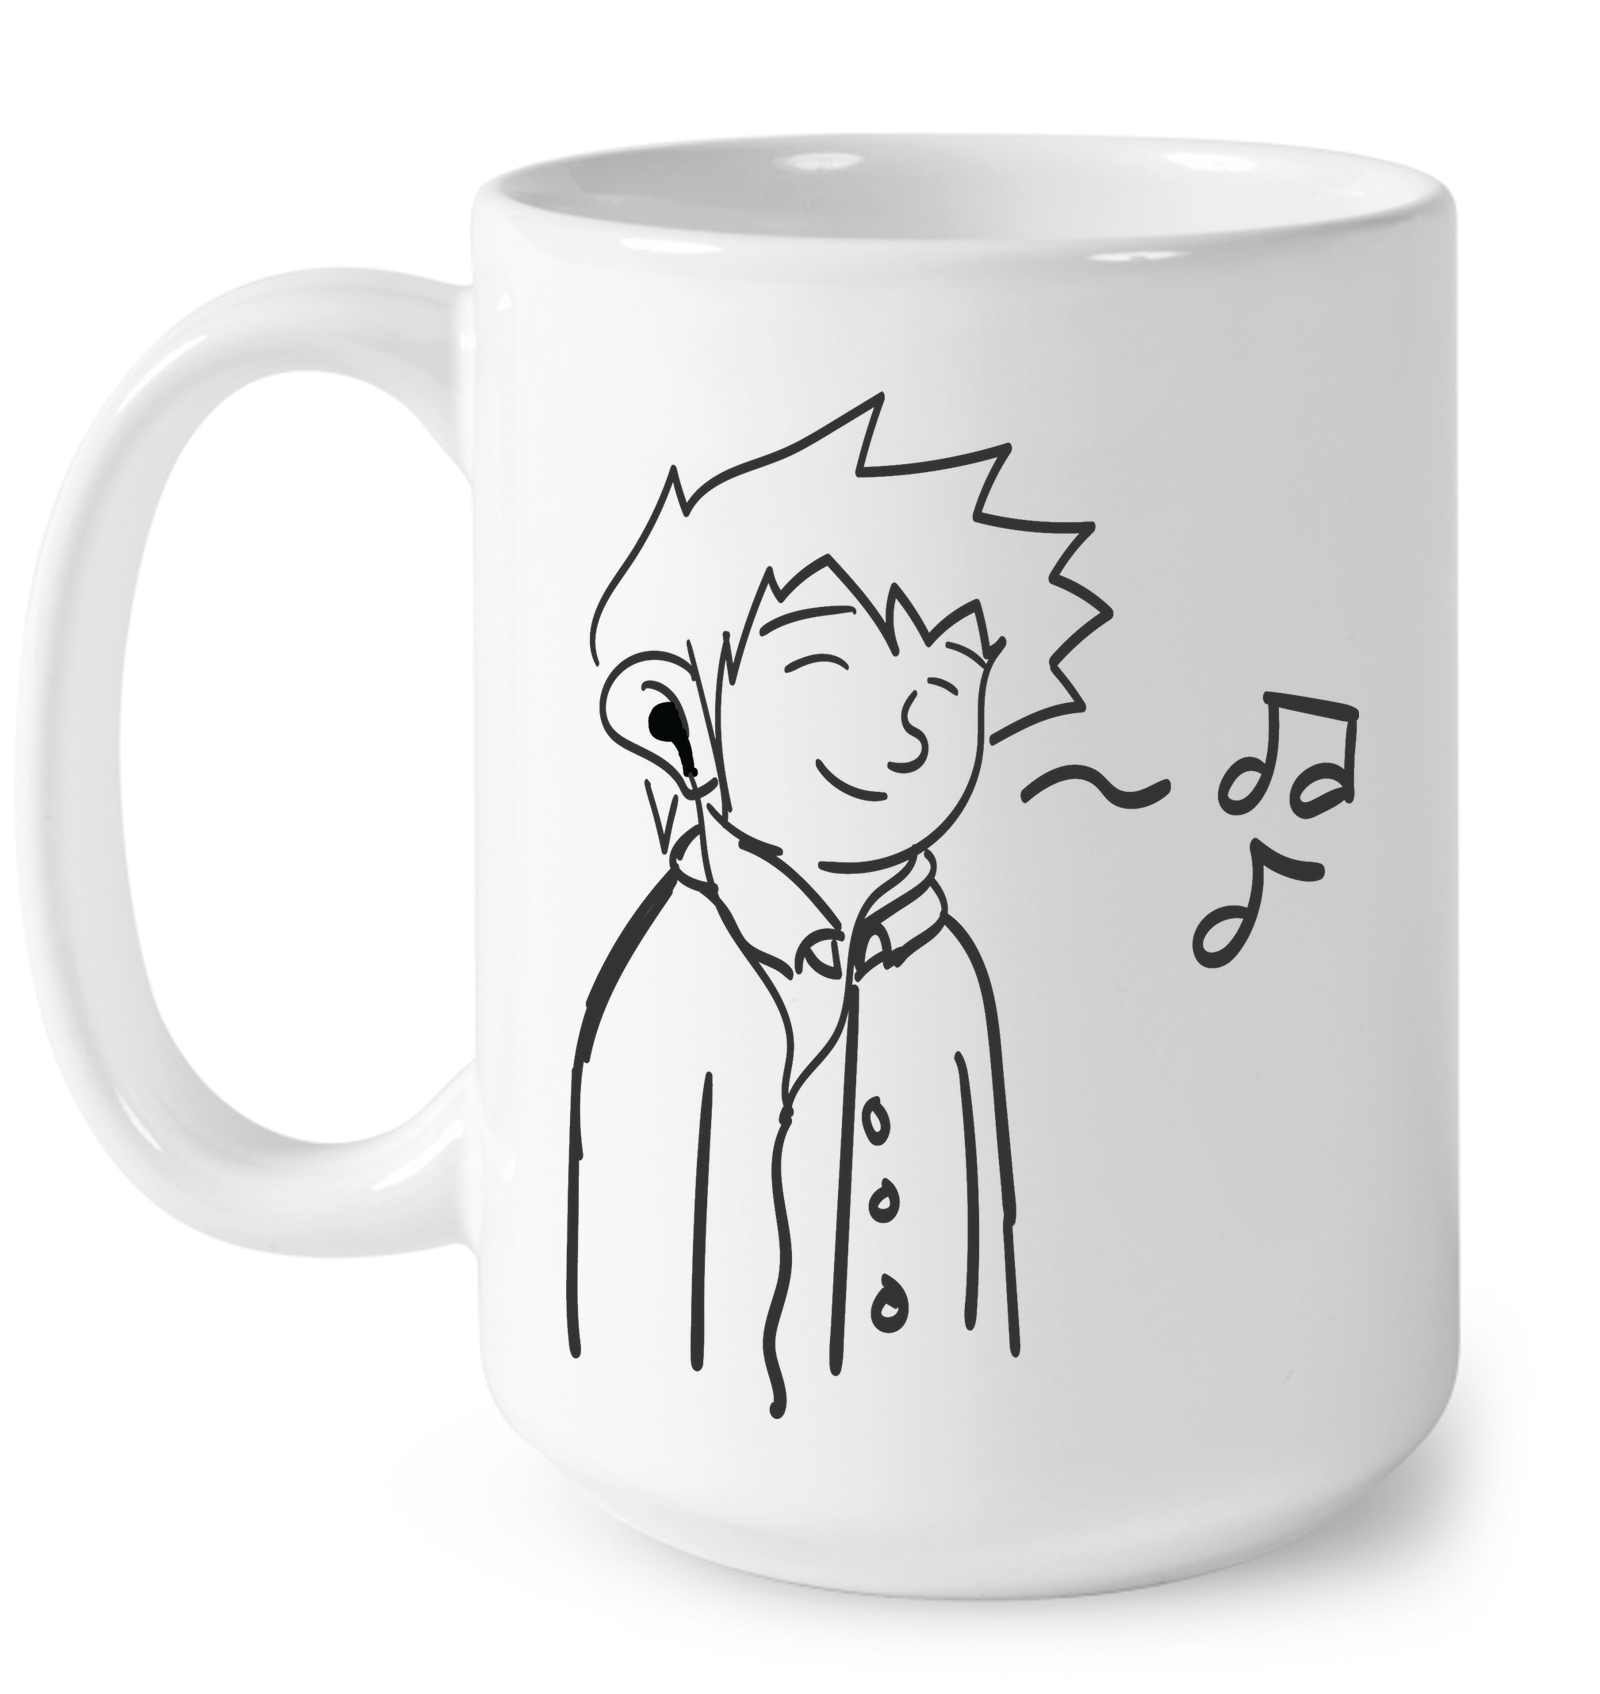 Listening to my Song - Ceramic Mug